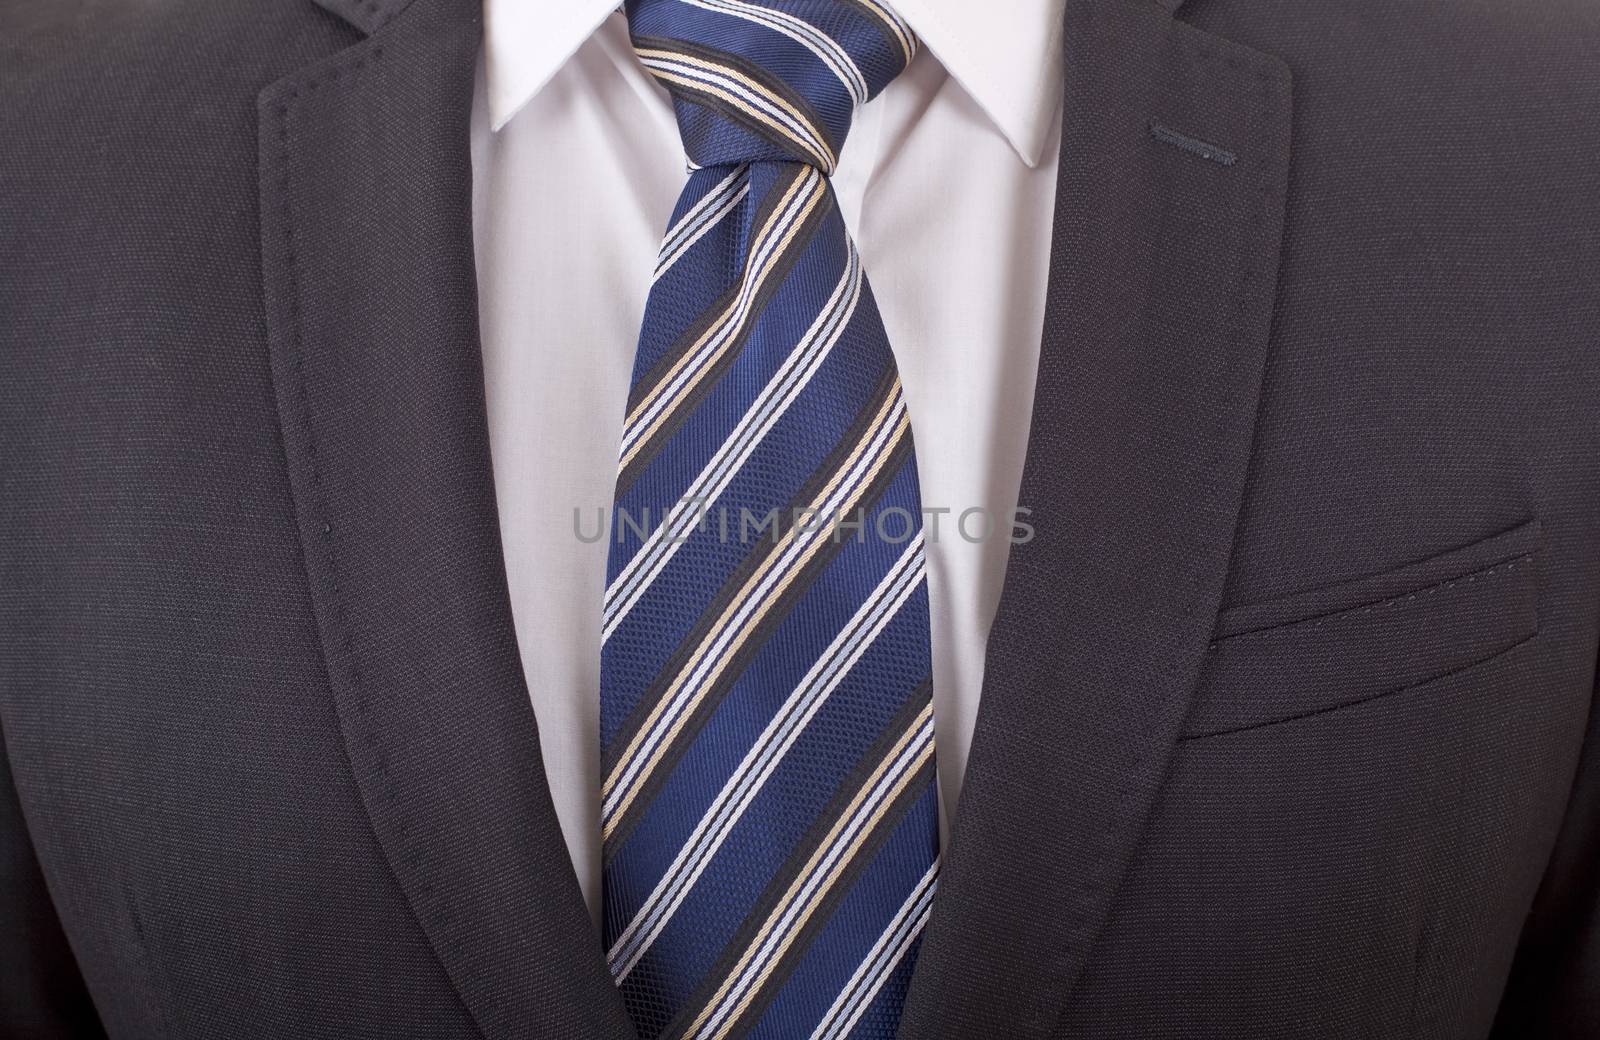 Business Power, Detail closeup - jacket men's, shirt with a blue tie